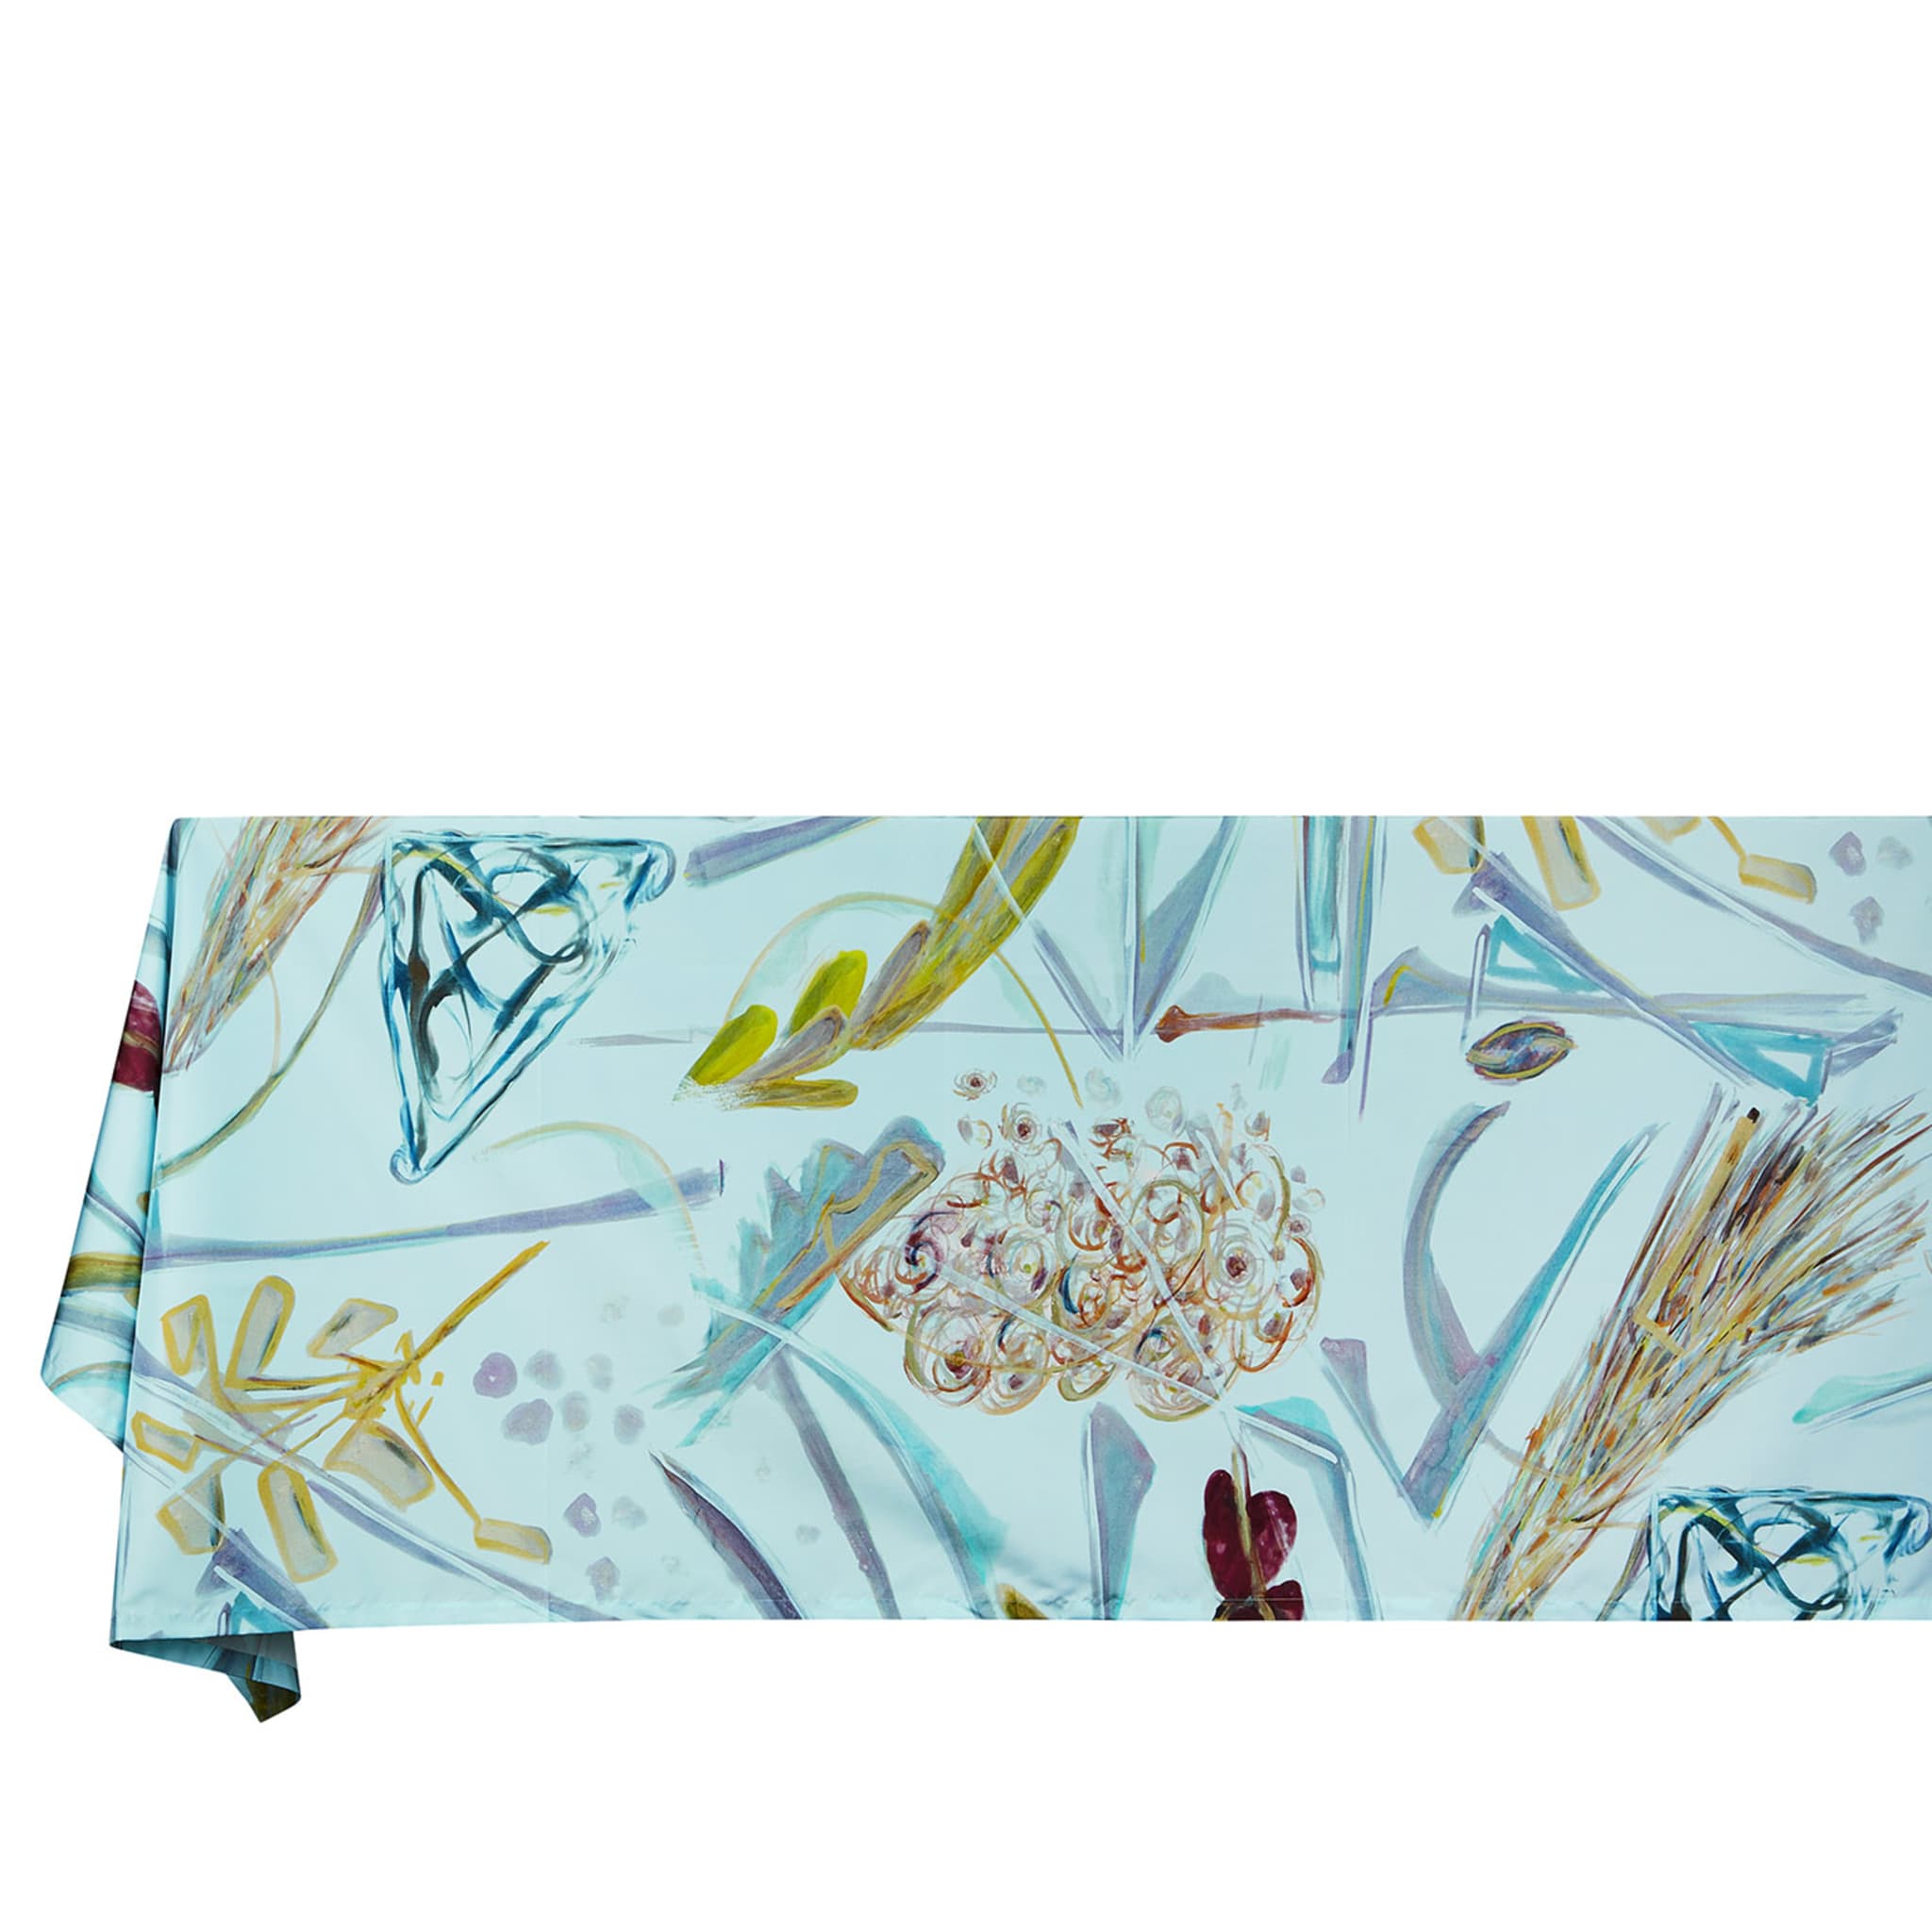 Panarea Patterned Polychrome Light Blue Tablecloth - Alternative view 1